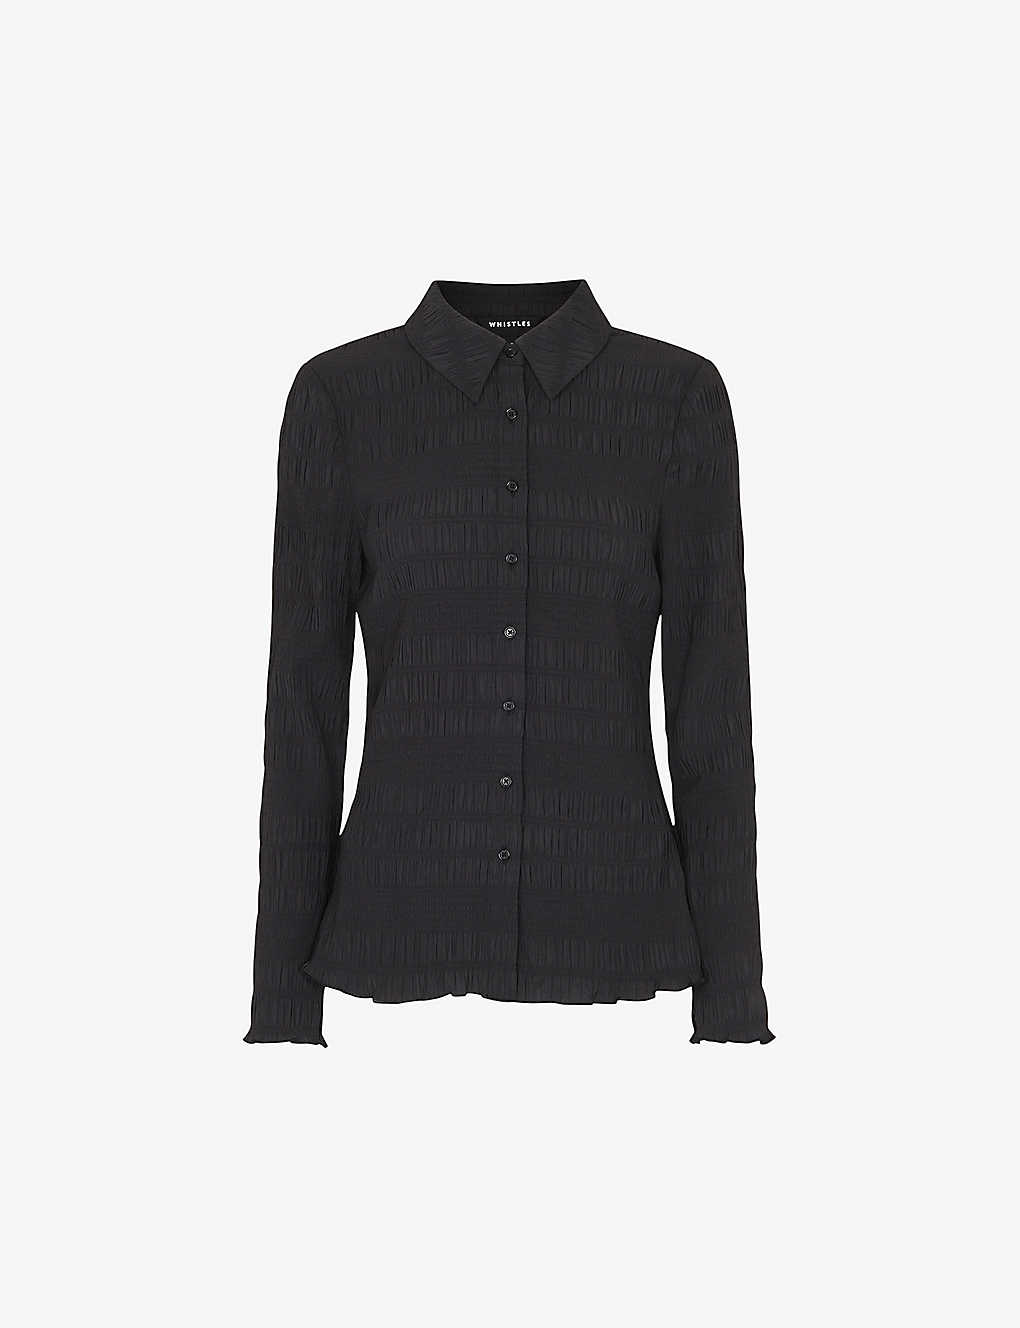 Whistles Women's Black Long-sleeved Plissé Woven Shirt